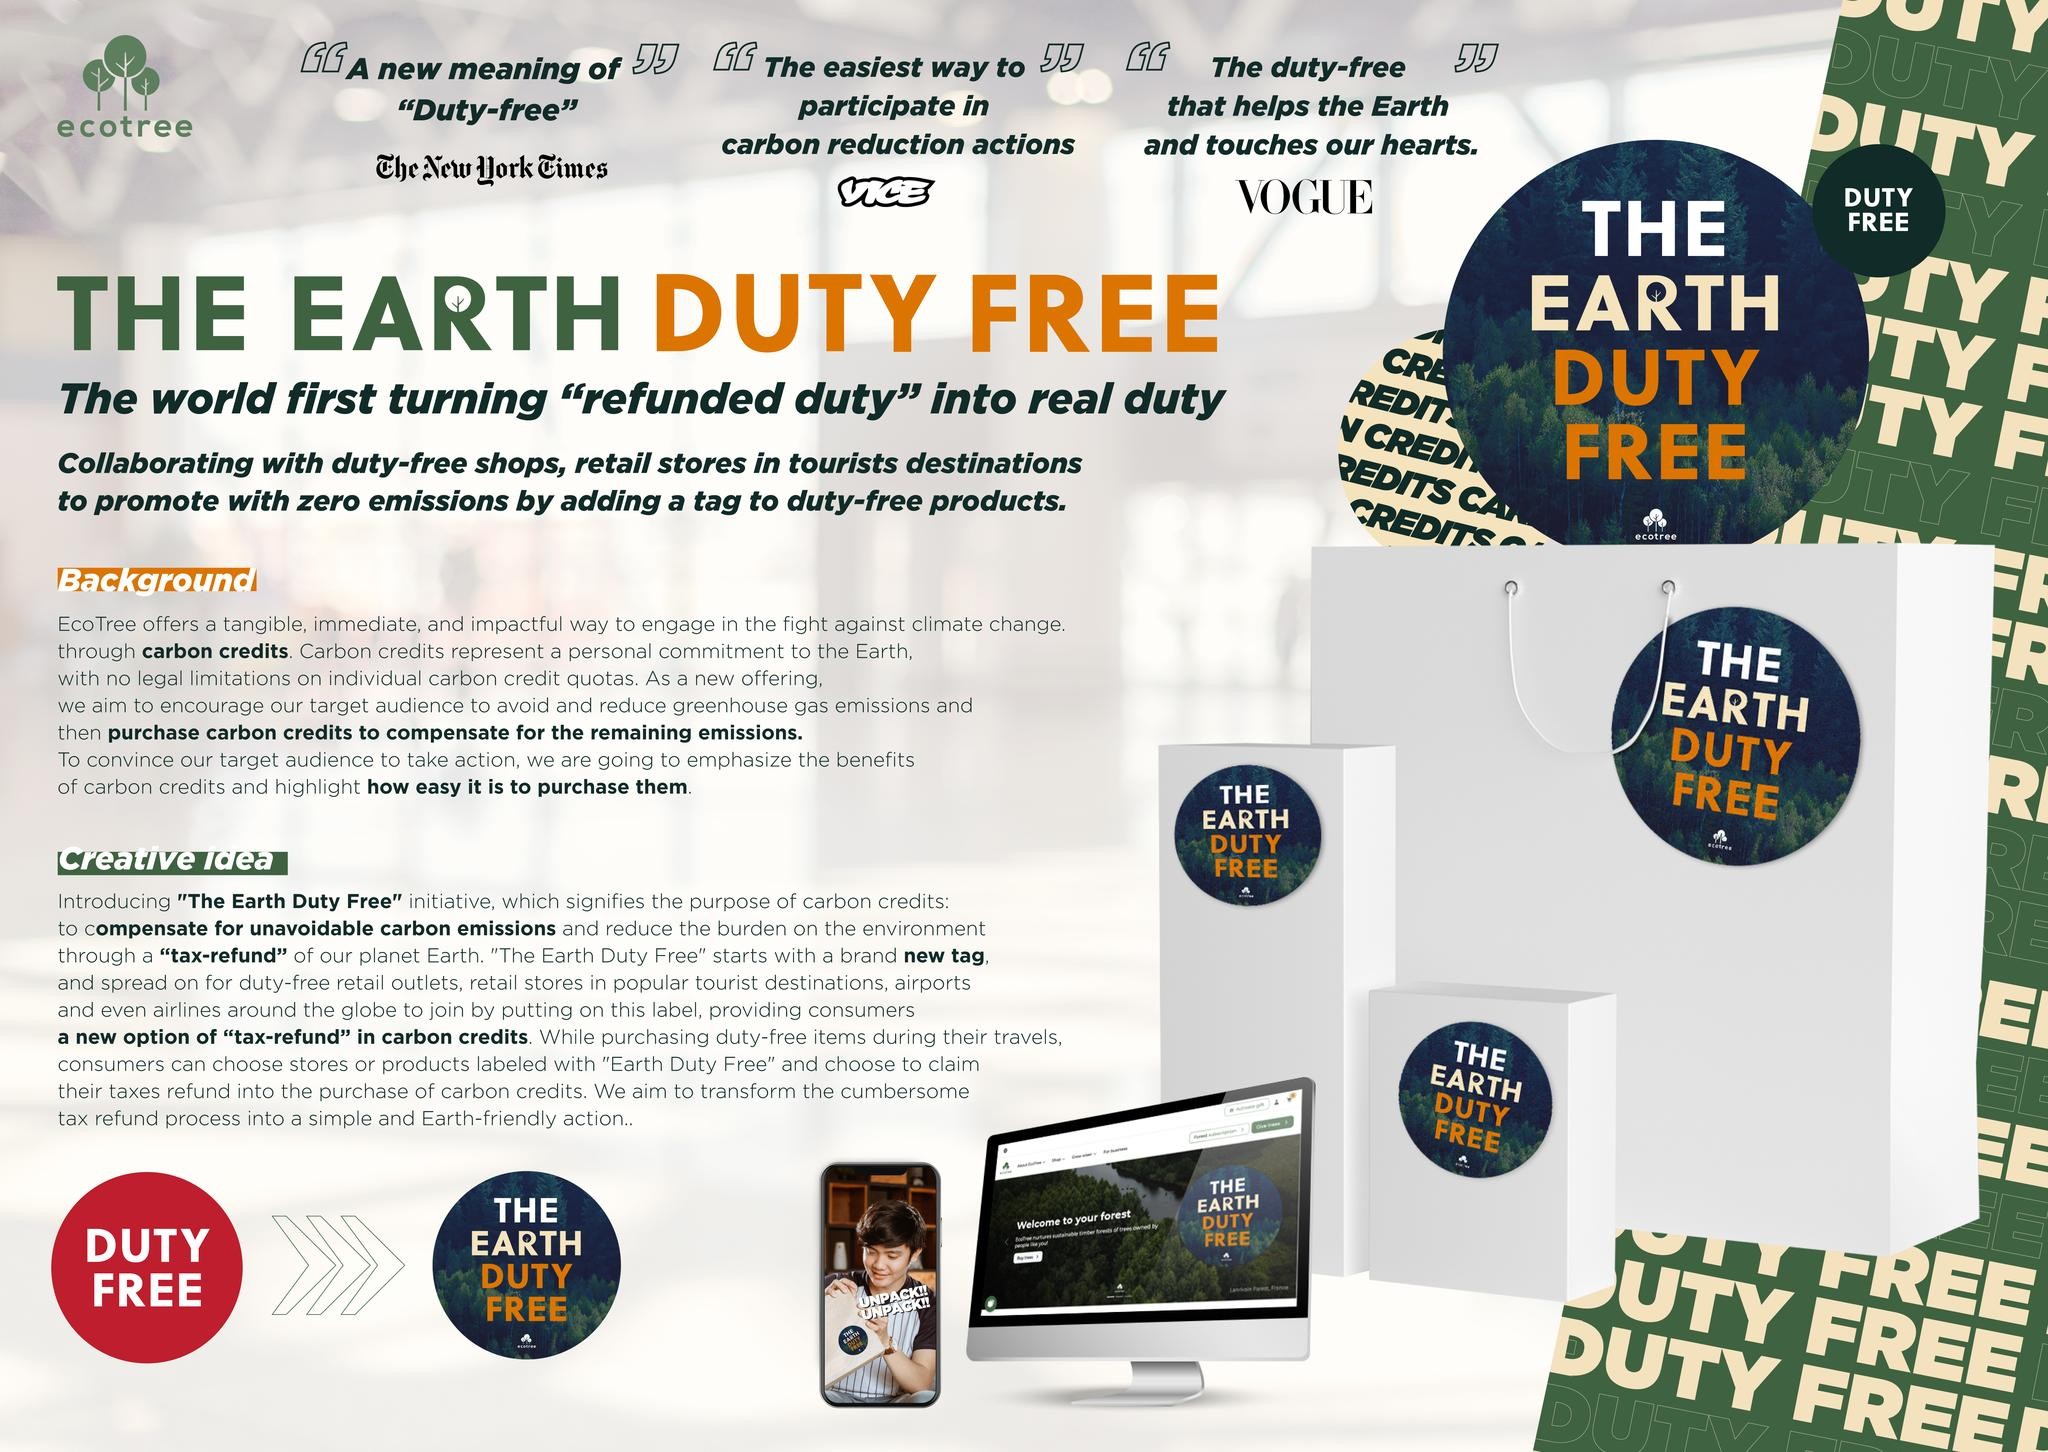 The Earth Duty Free